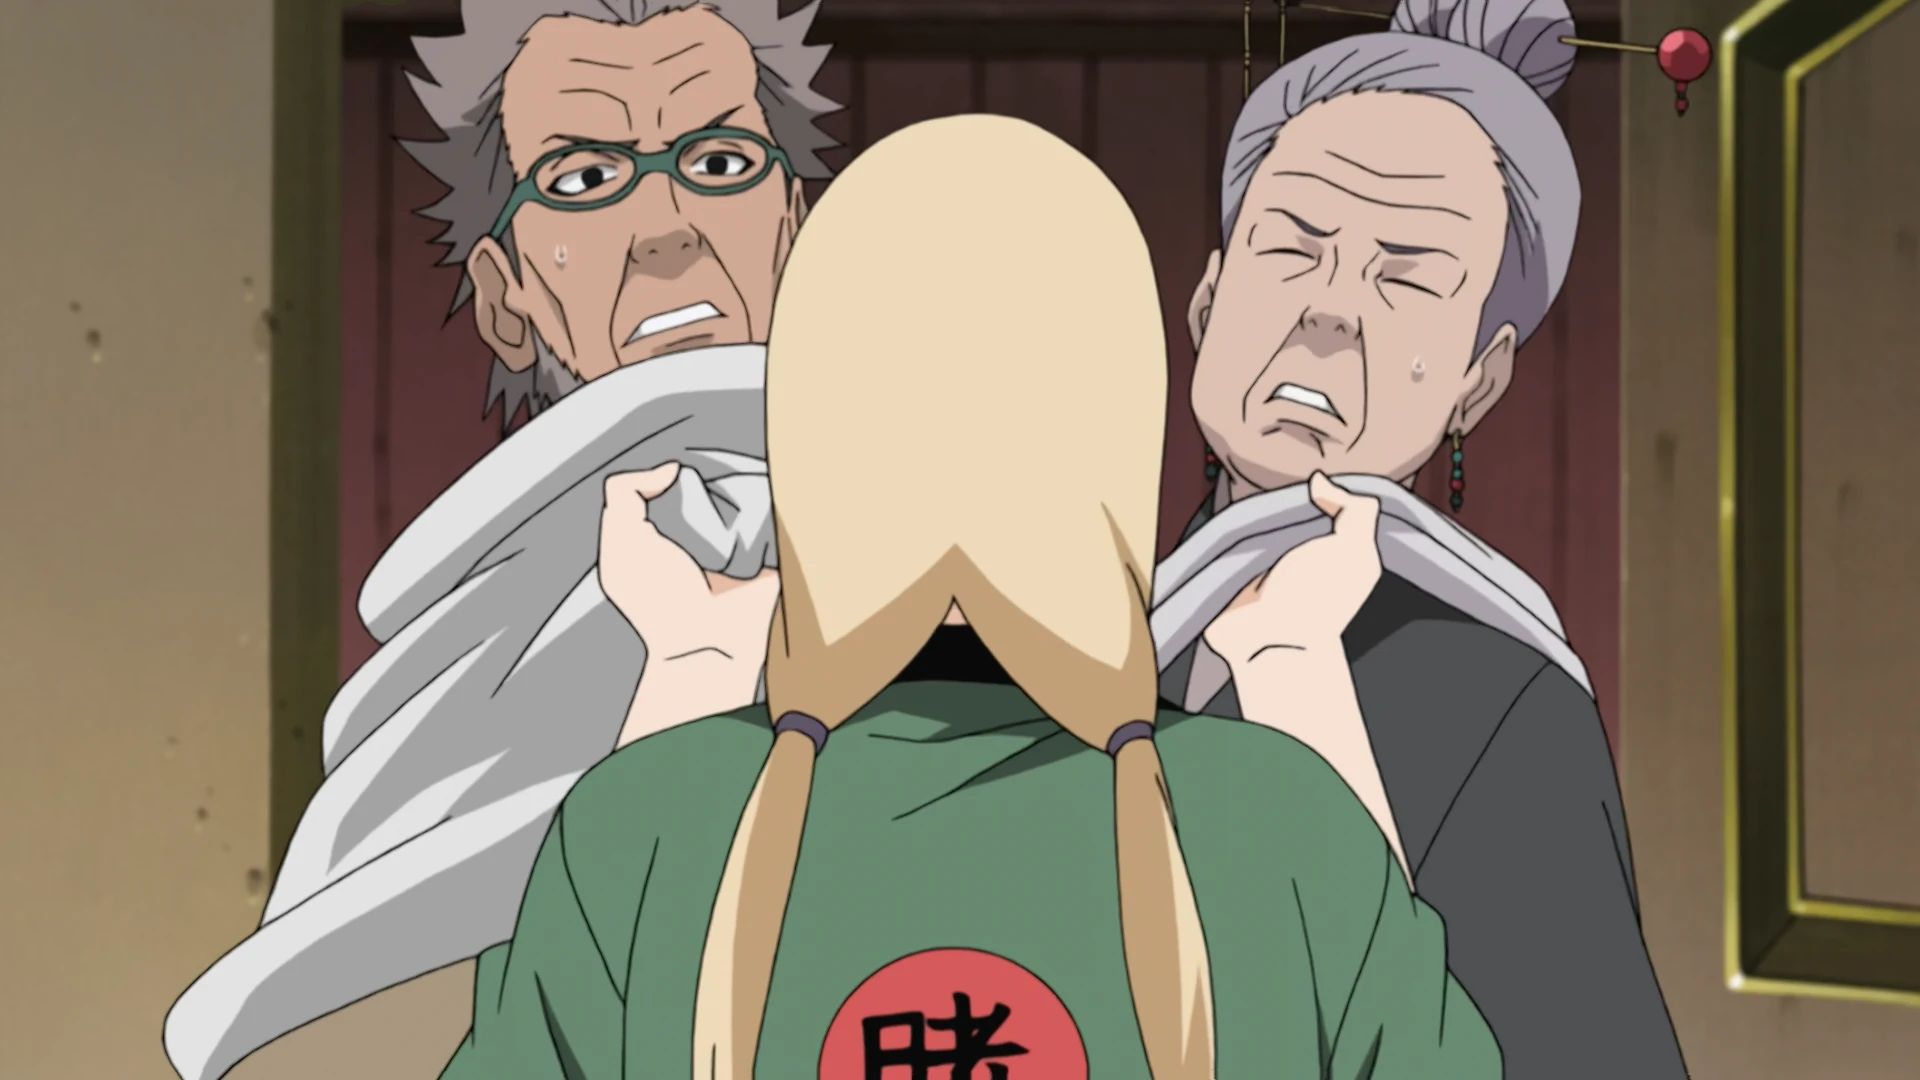 Screenshot from Naruto Shippuden anime shows Tsunade grabbing Homura and Koharu by their clothes threateningly.